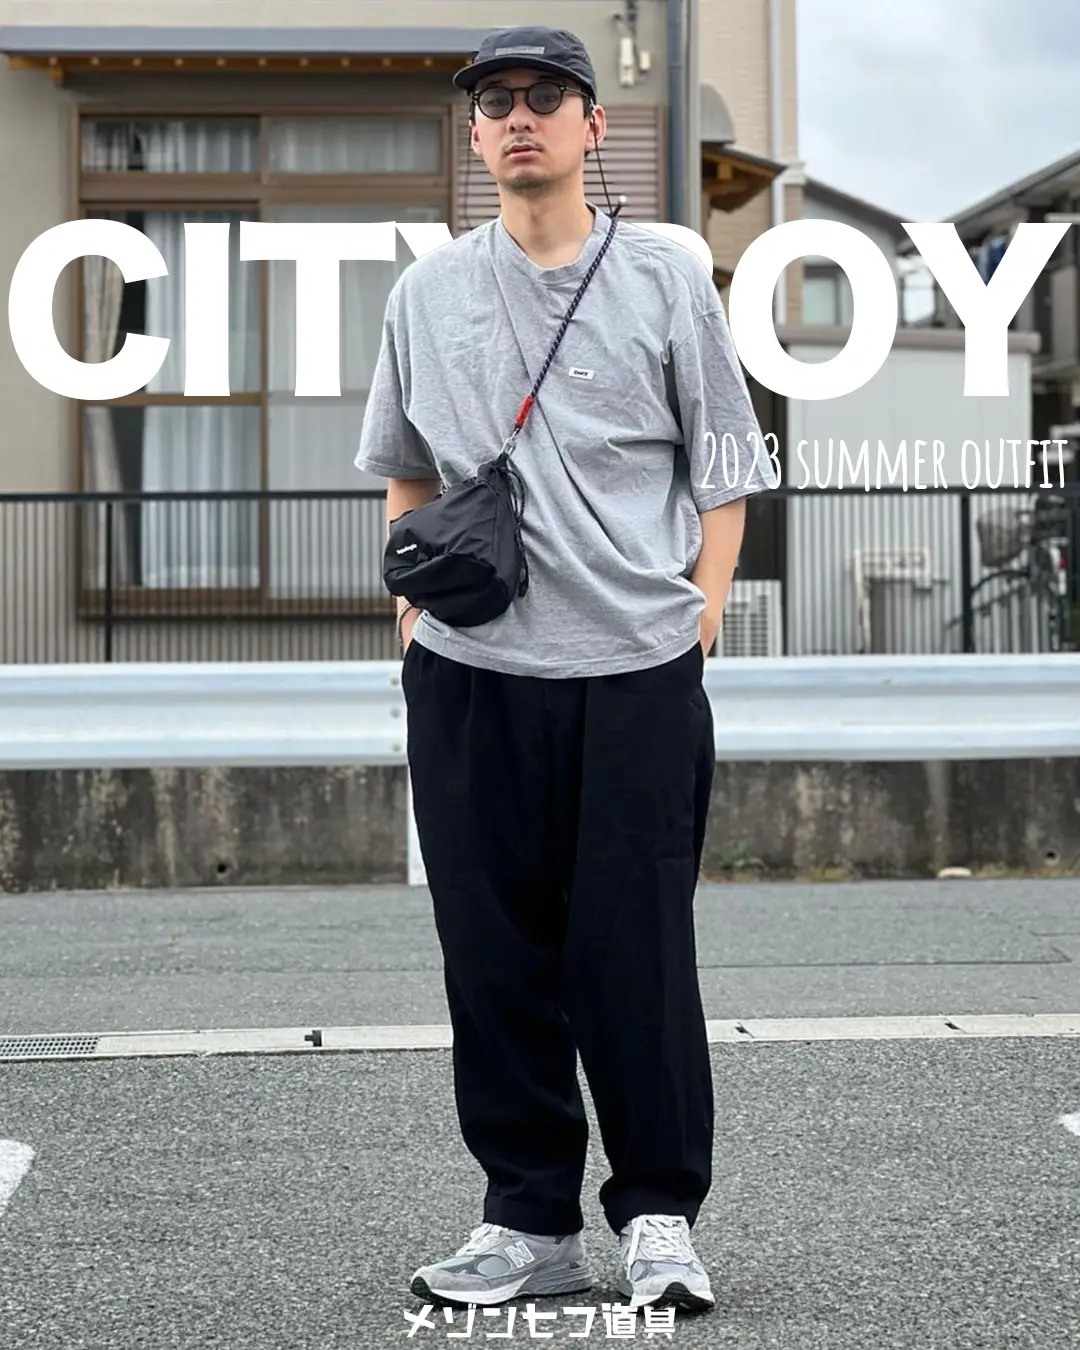 夏のcity boy style set （ c-boy ）grungeStyle